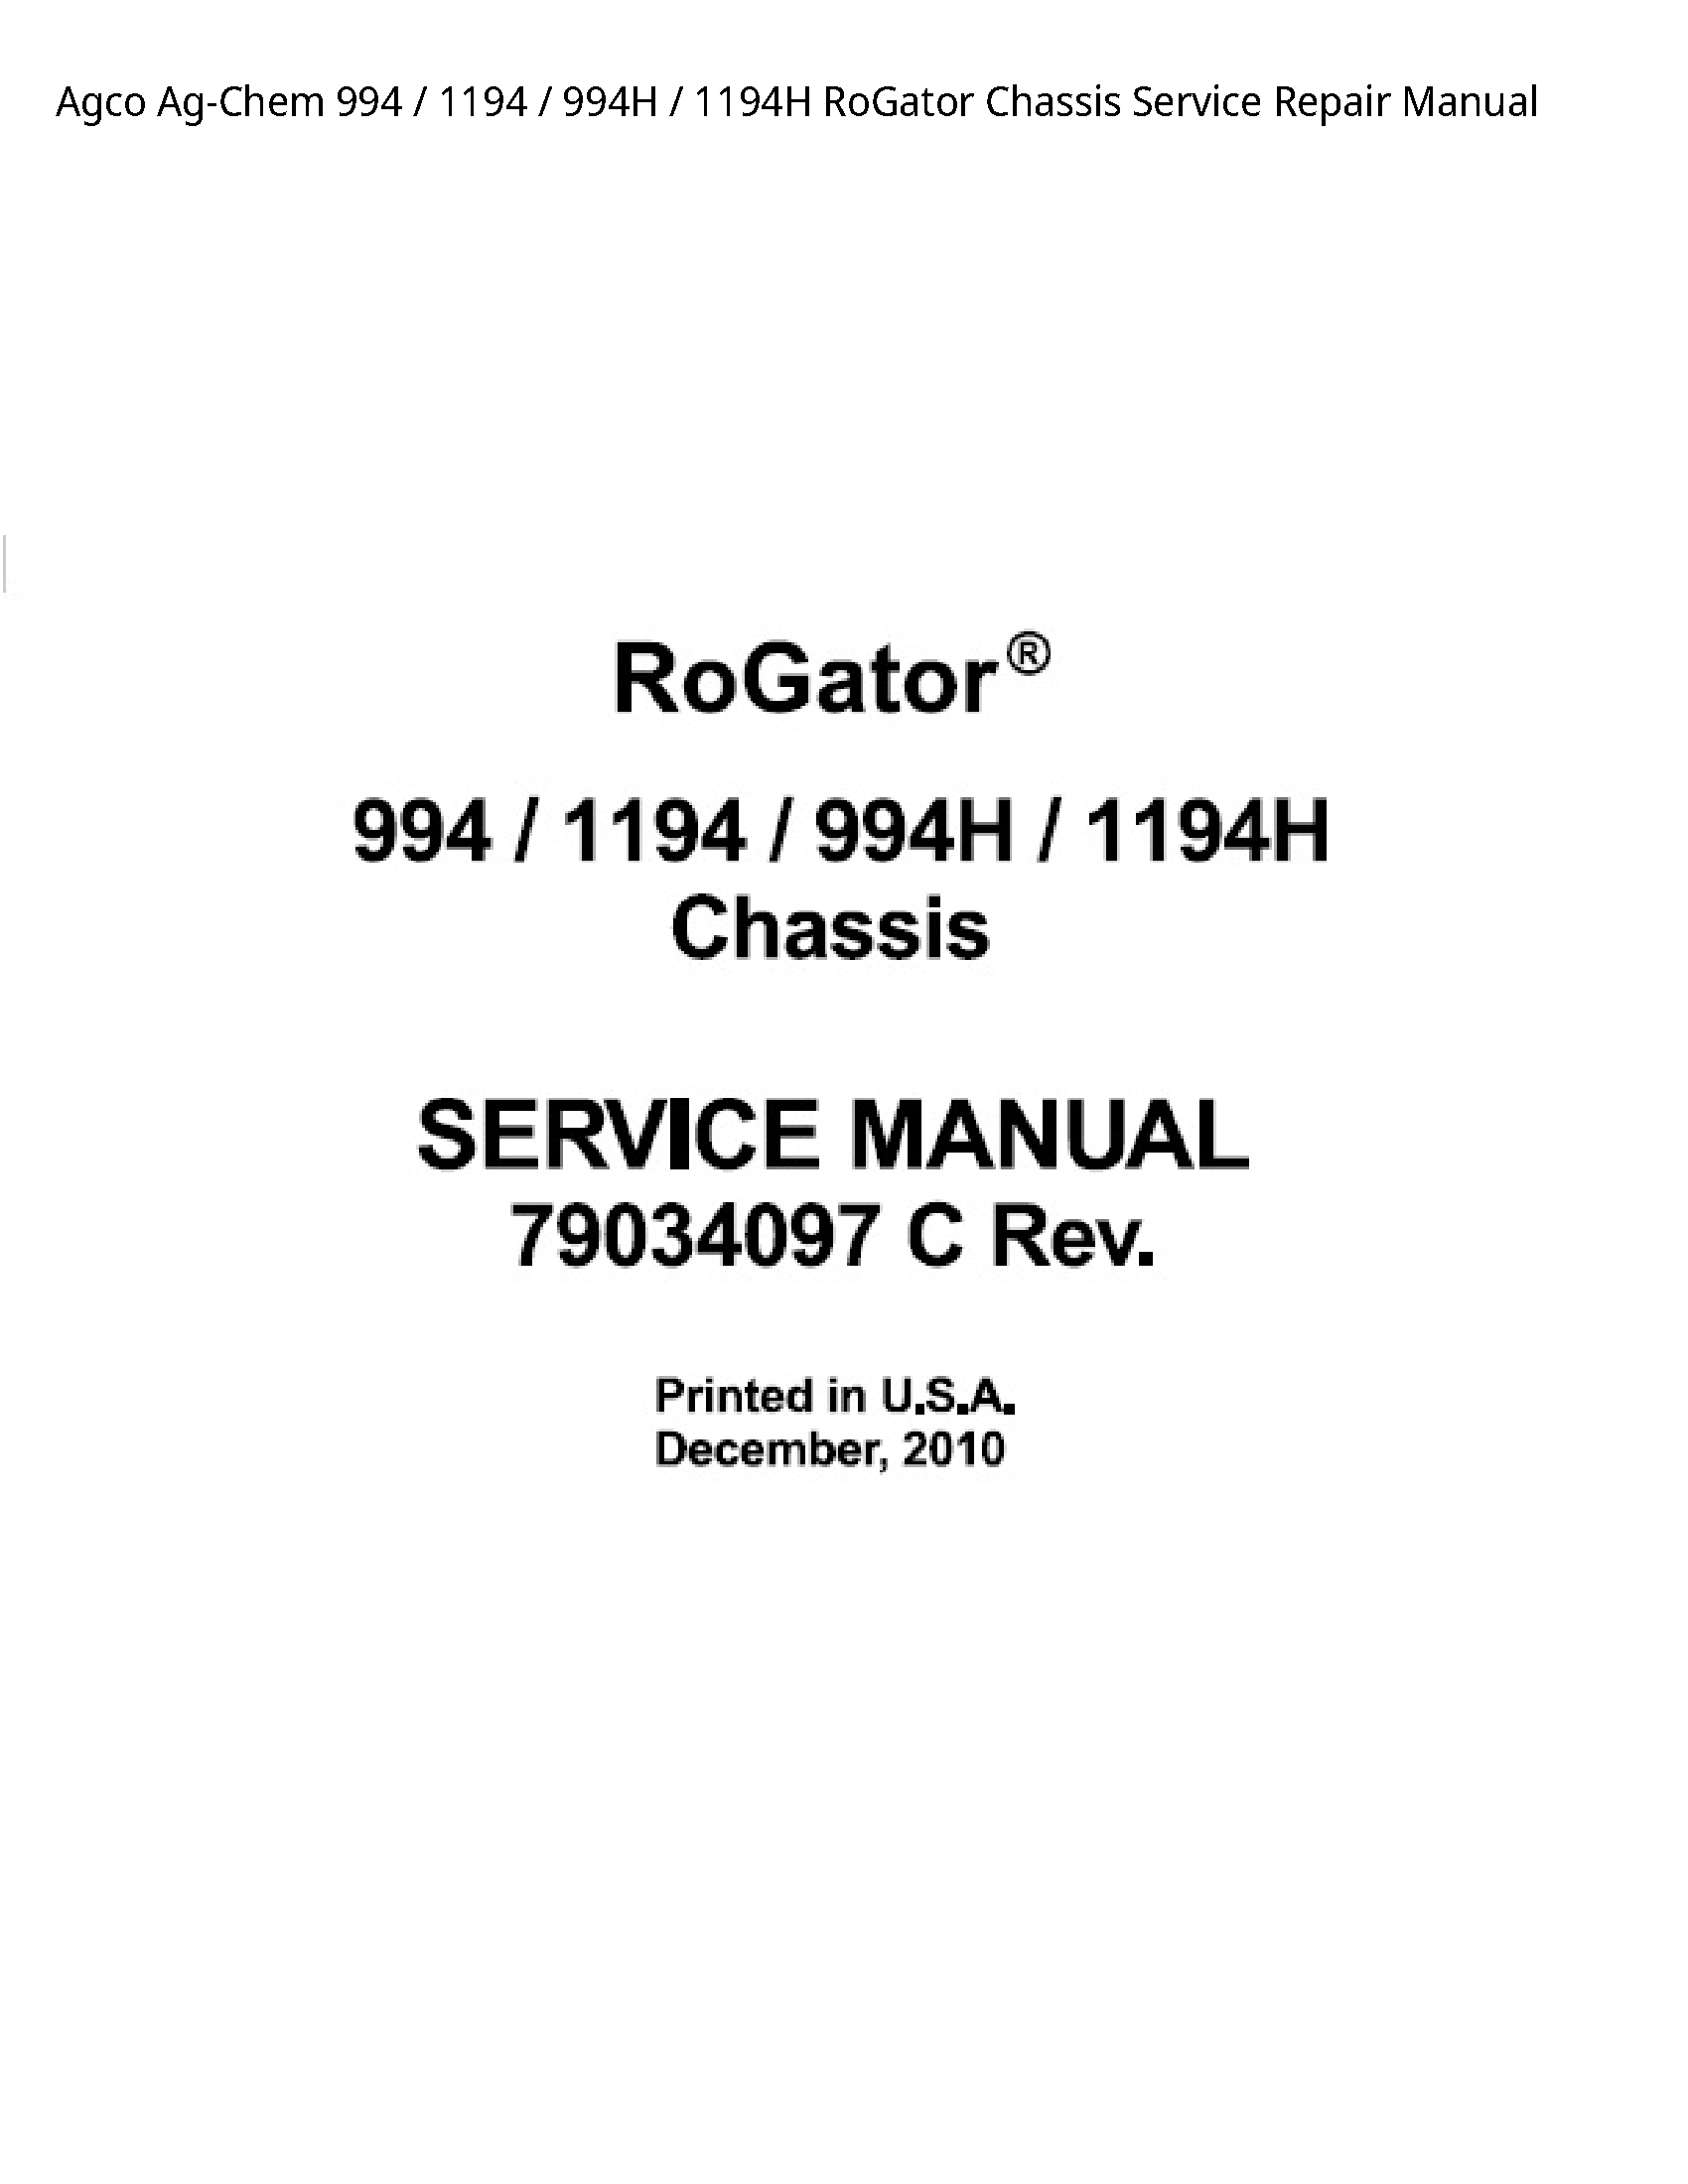 AGCO 994 Ag-Chem RoGator Chassis manual